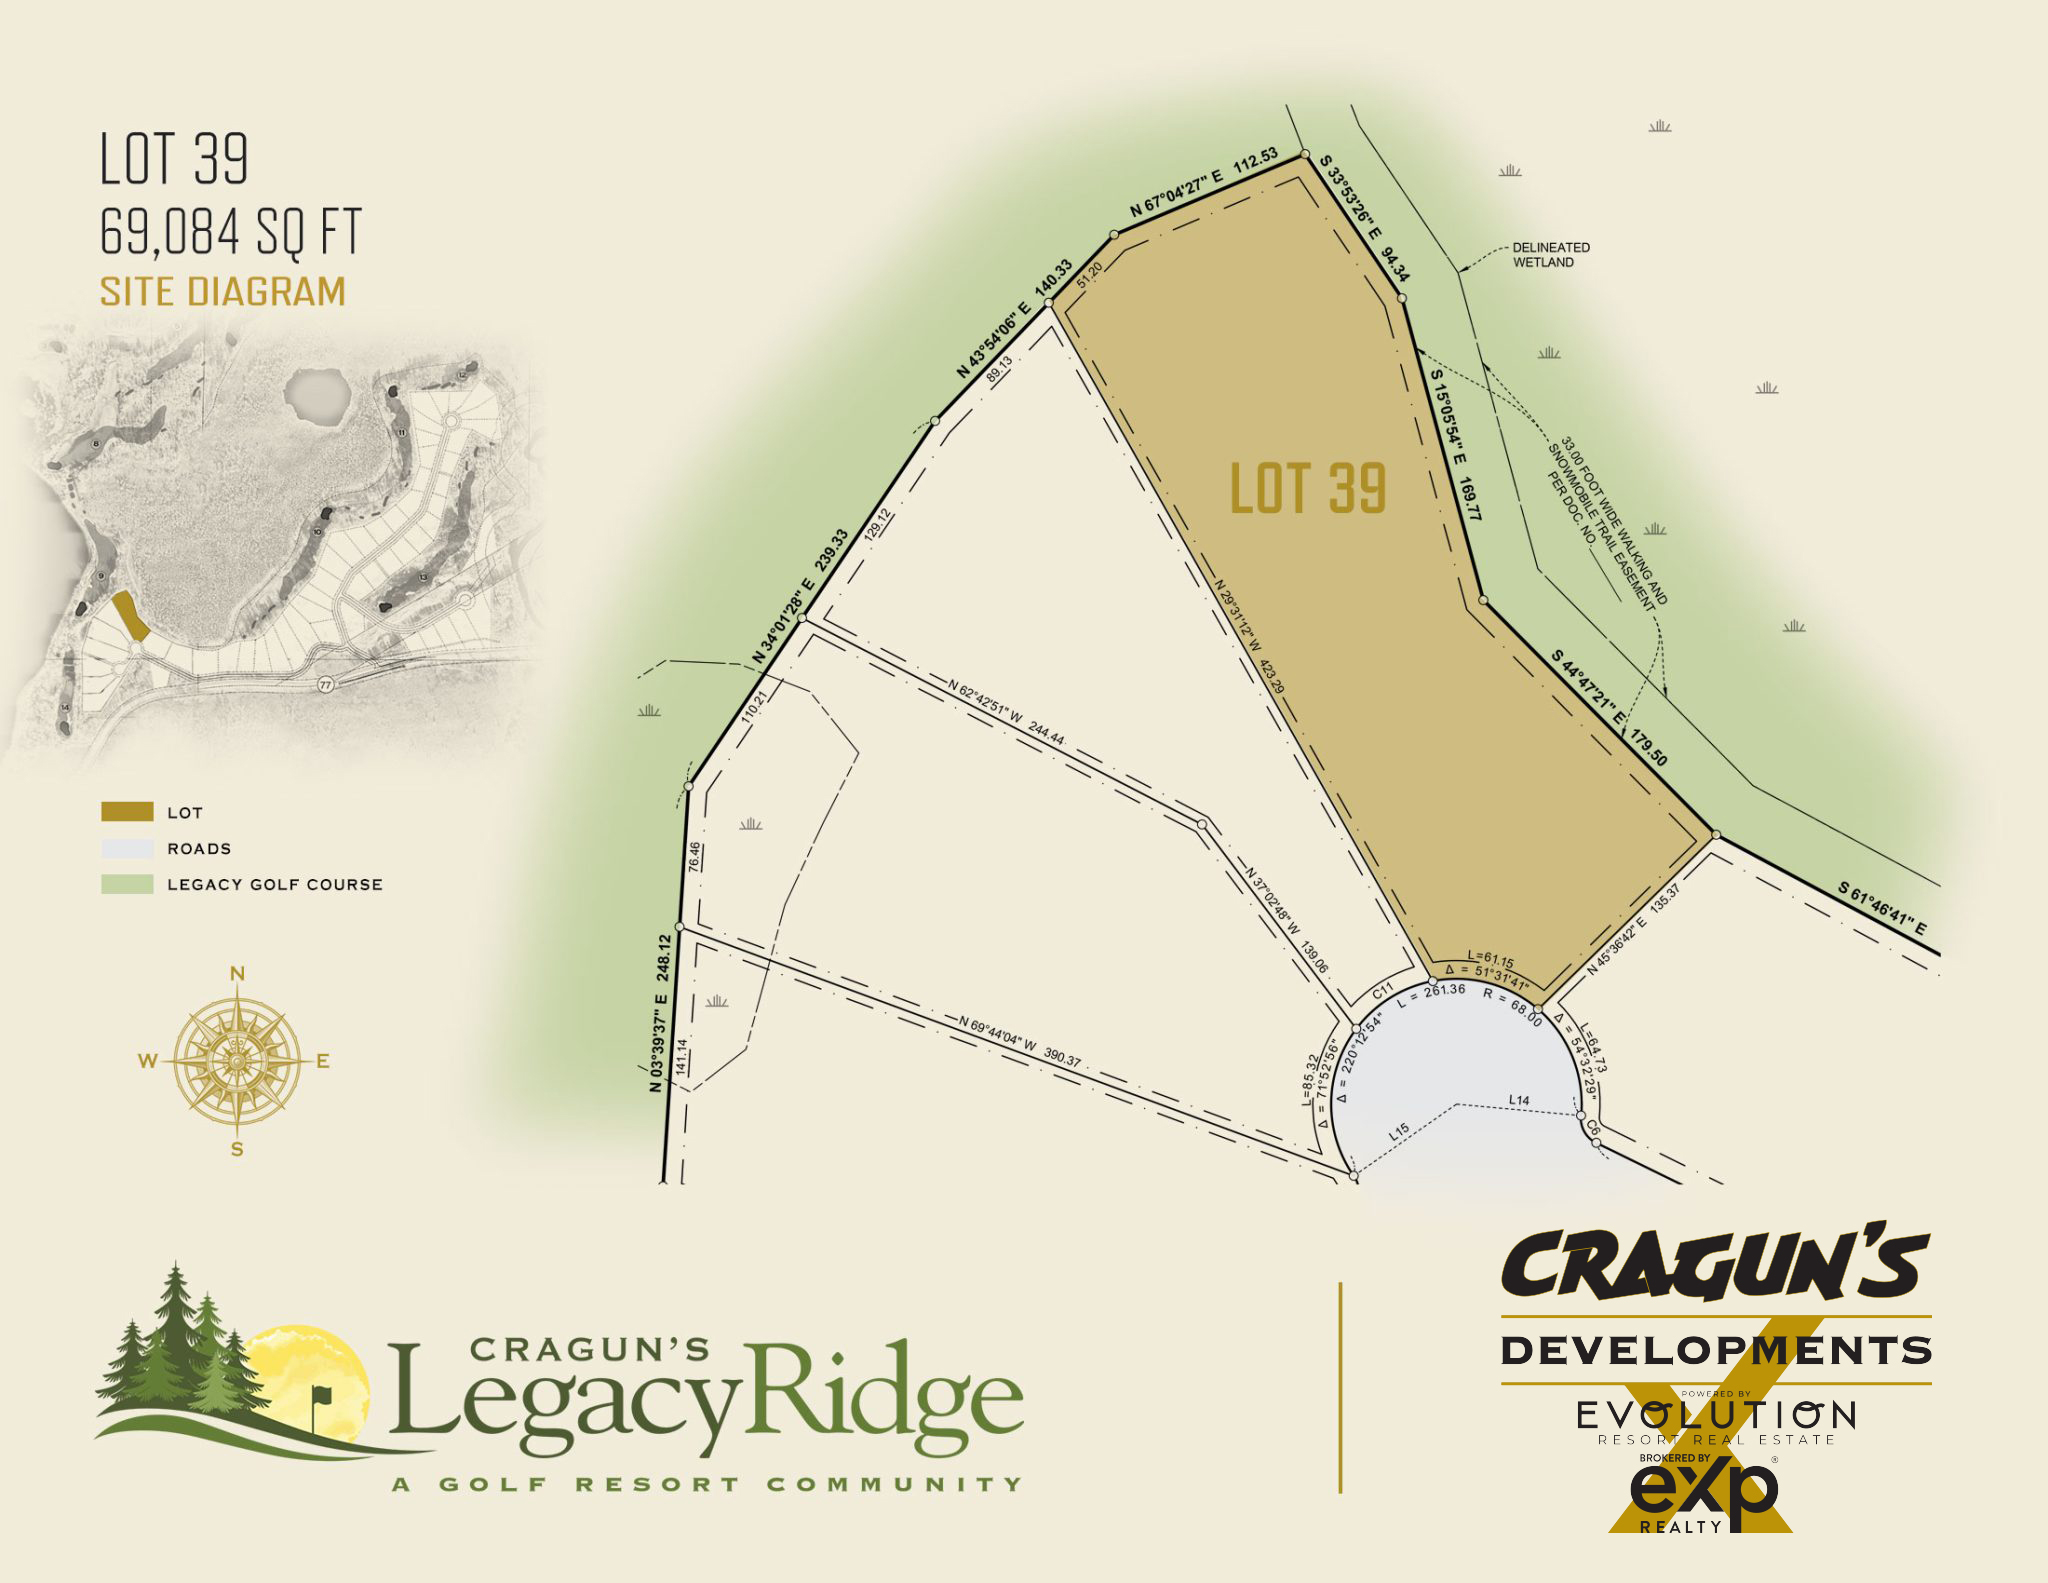 Legacy Ridge Lot 39 at Cragun's Developments in Brainerd, MN